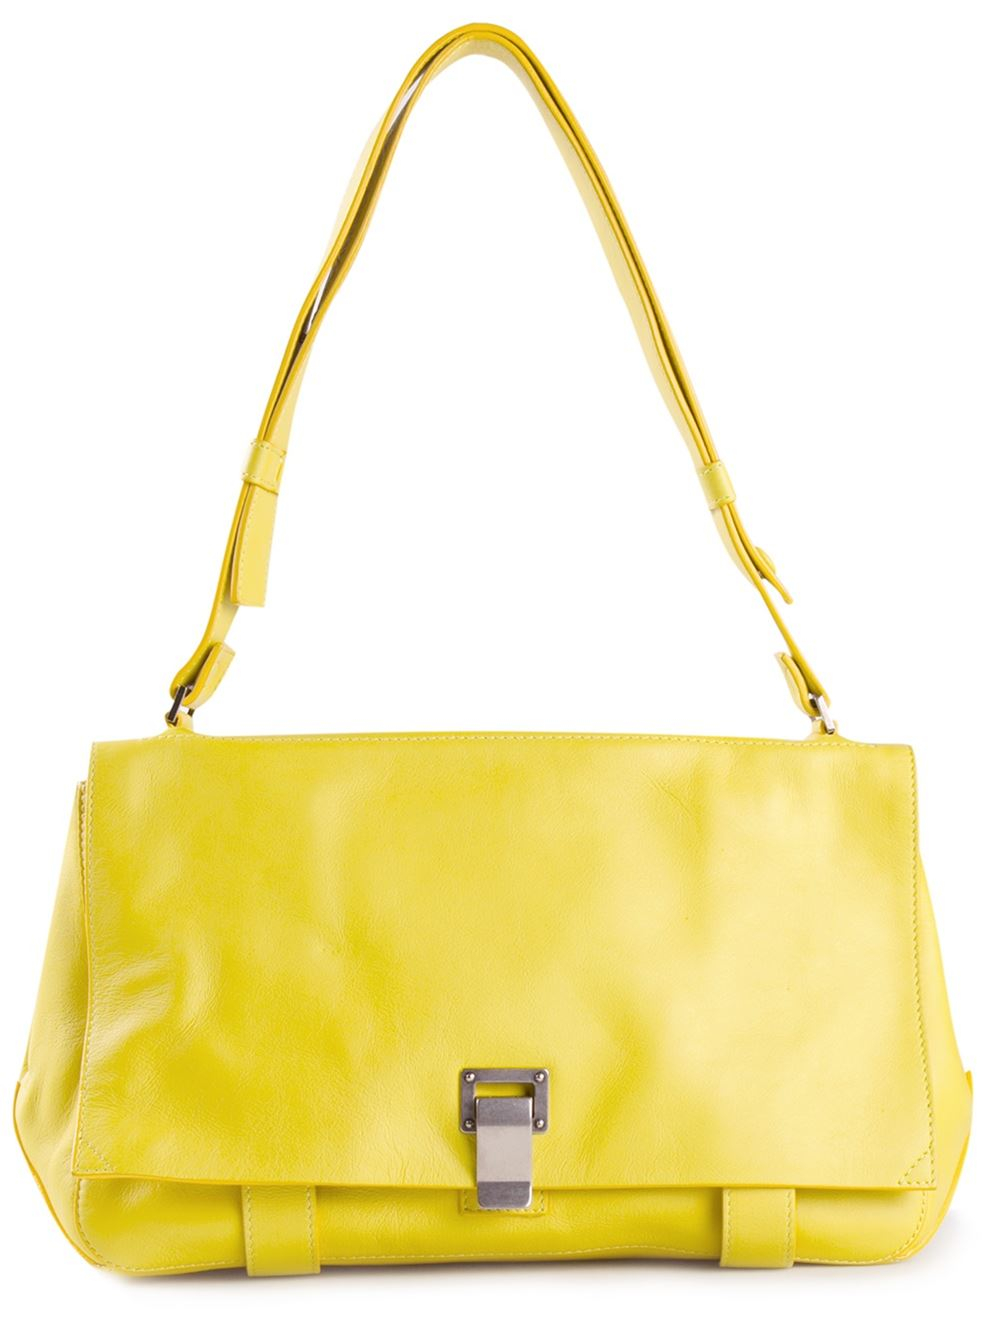 Lyst - Proenza Schouler Large Courier Shoulder Bag in Yellow